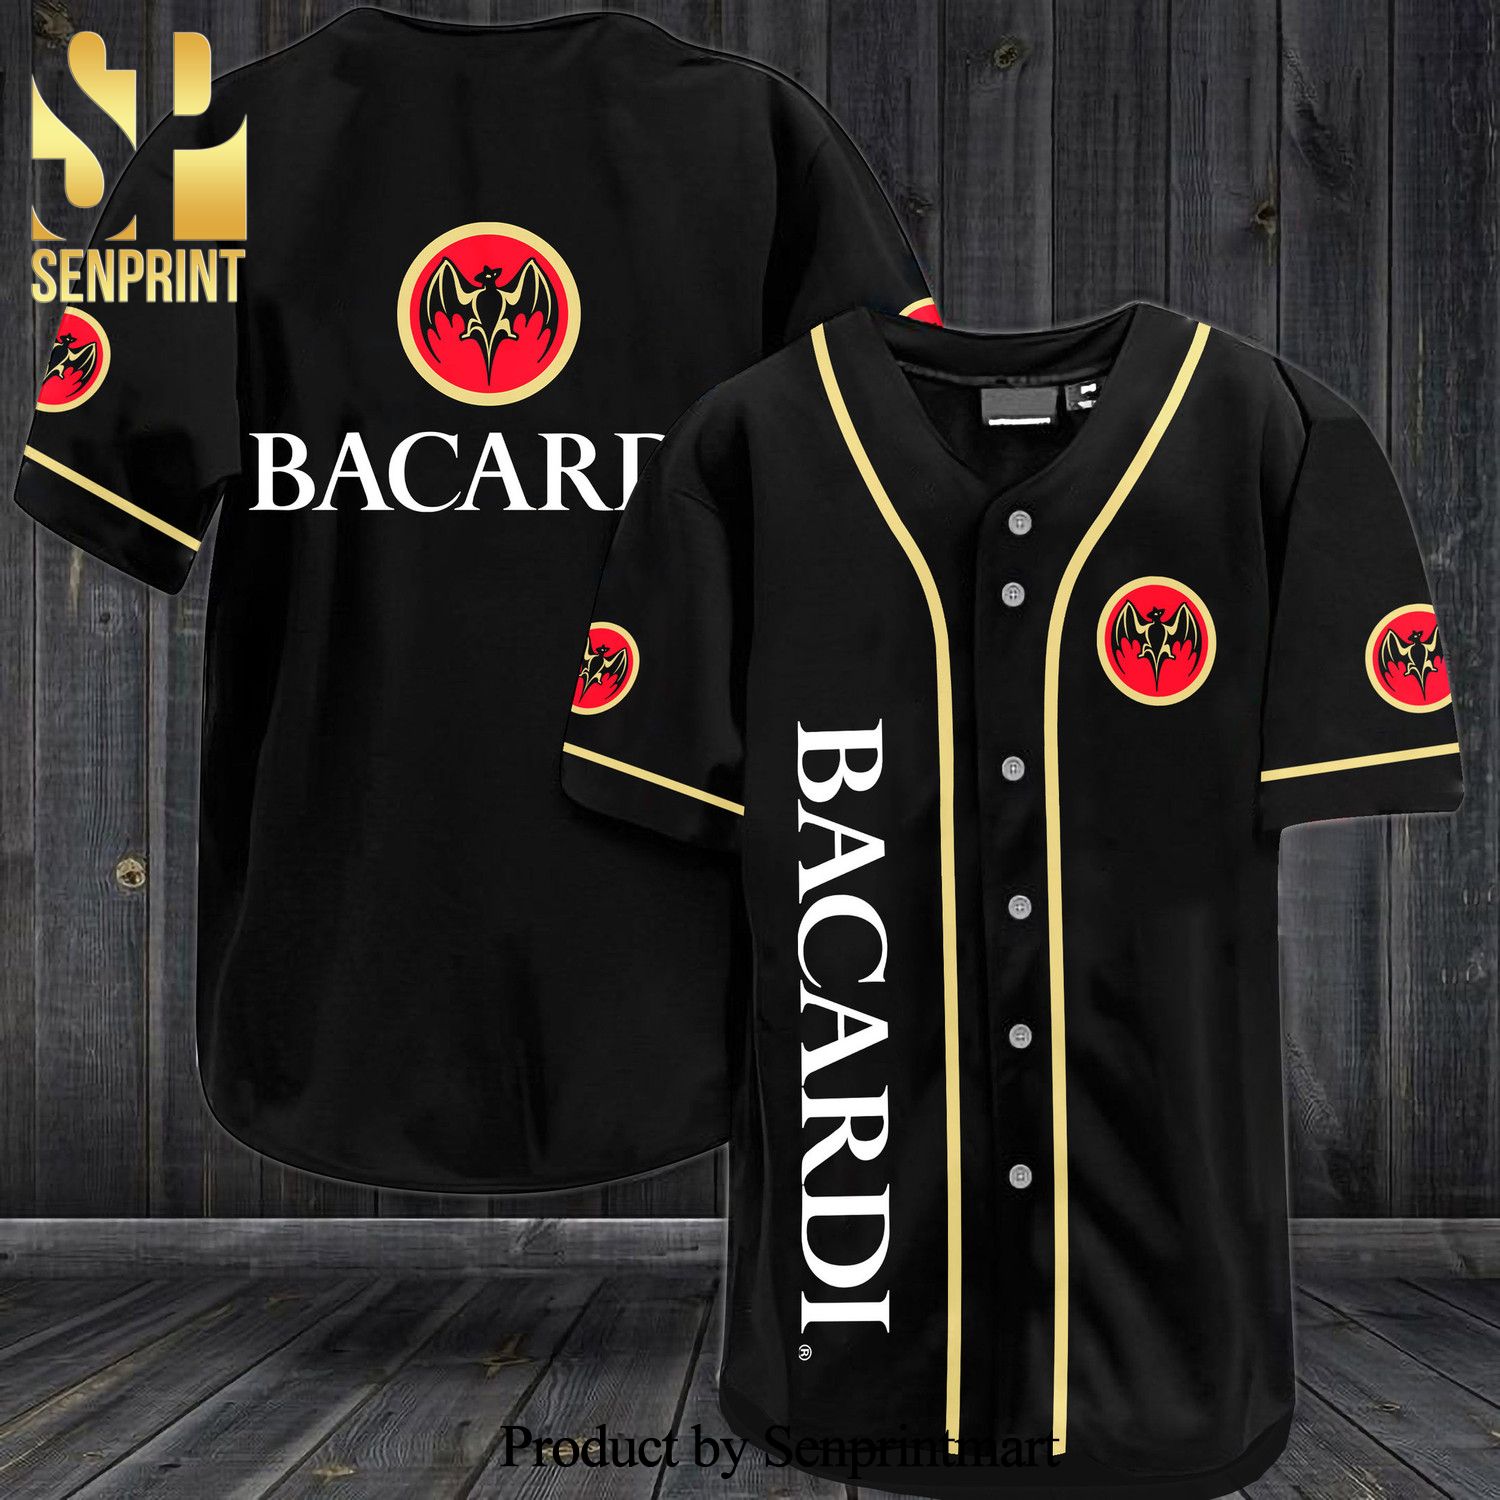 Bacardi All Over Print Baseball Jersey – Black